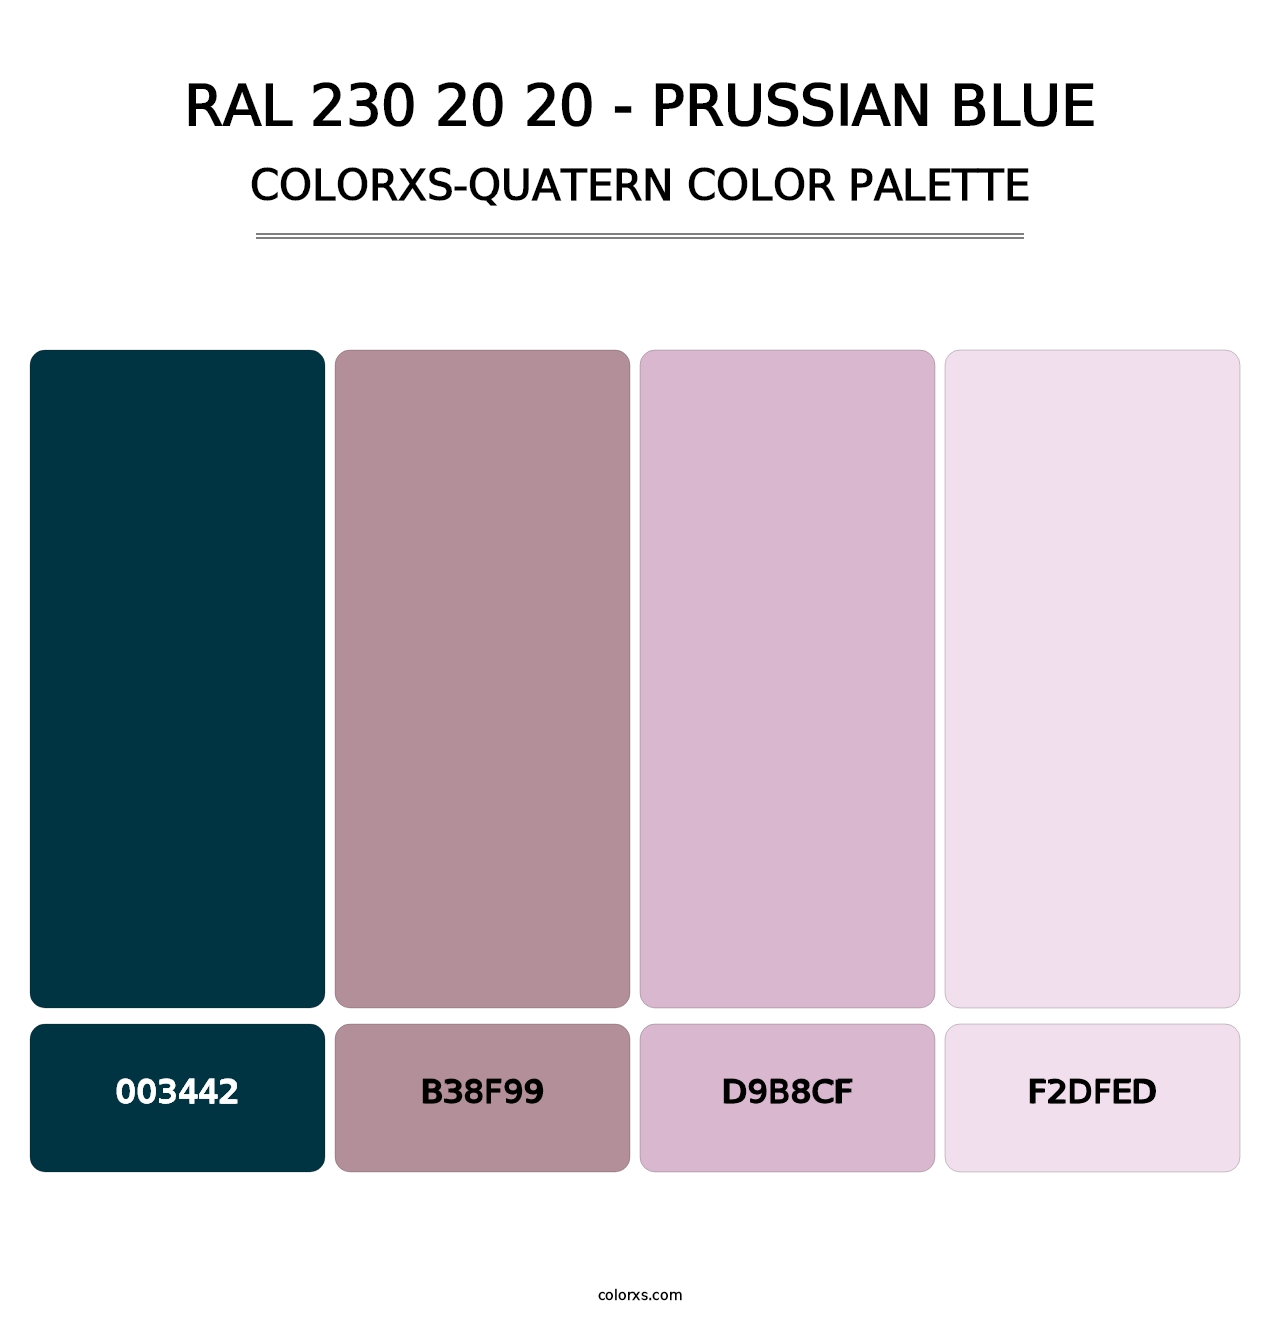 RAL 230 20 20 - Prussian Blue - Colorxs Quatern Palette